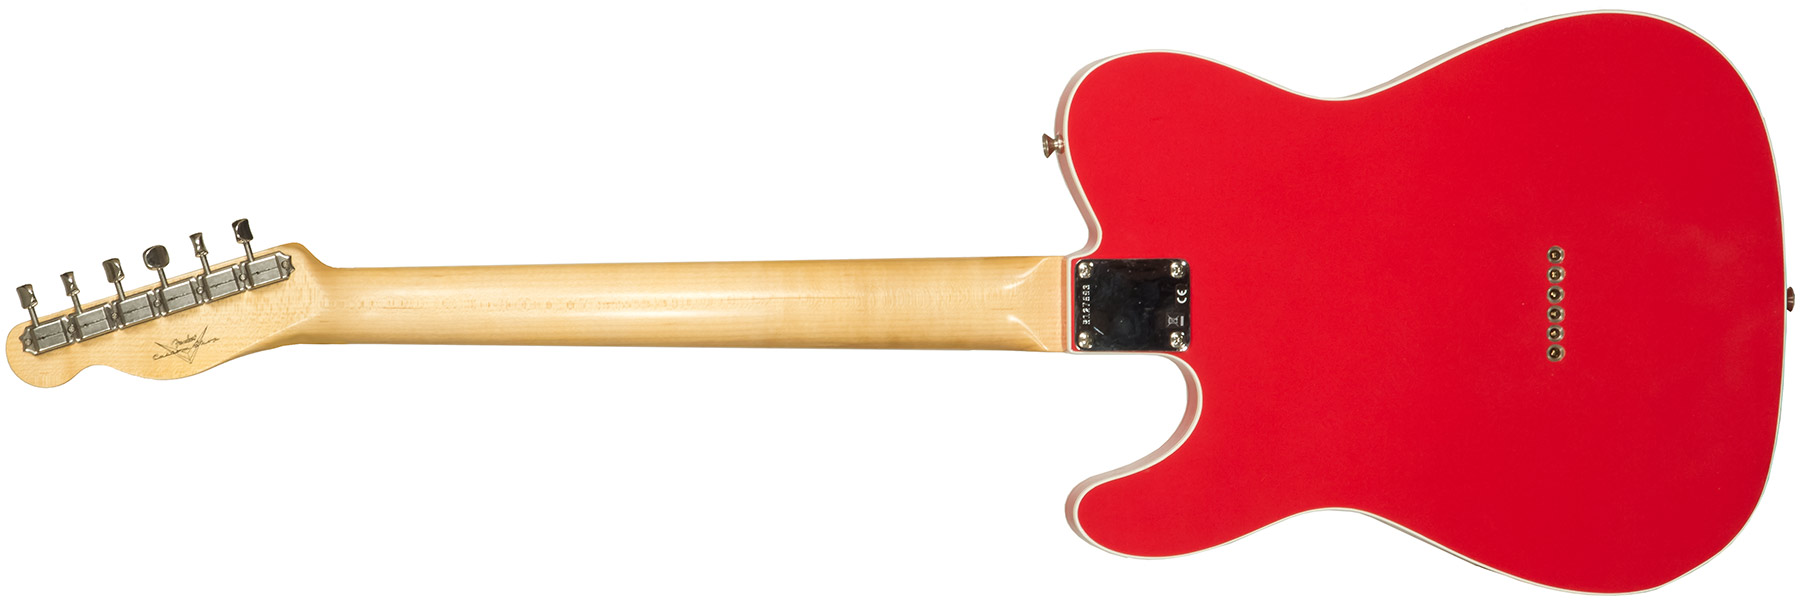 Fender Custom Shop Tele 1963 2s Ht Rw #r127693 - Closet Classic Fiesta Red - Televorm elektrische gitaar - Variation 1